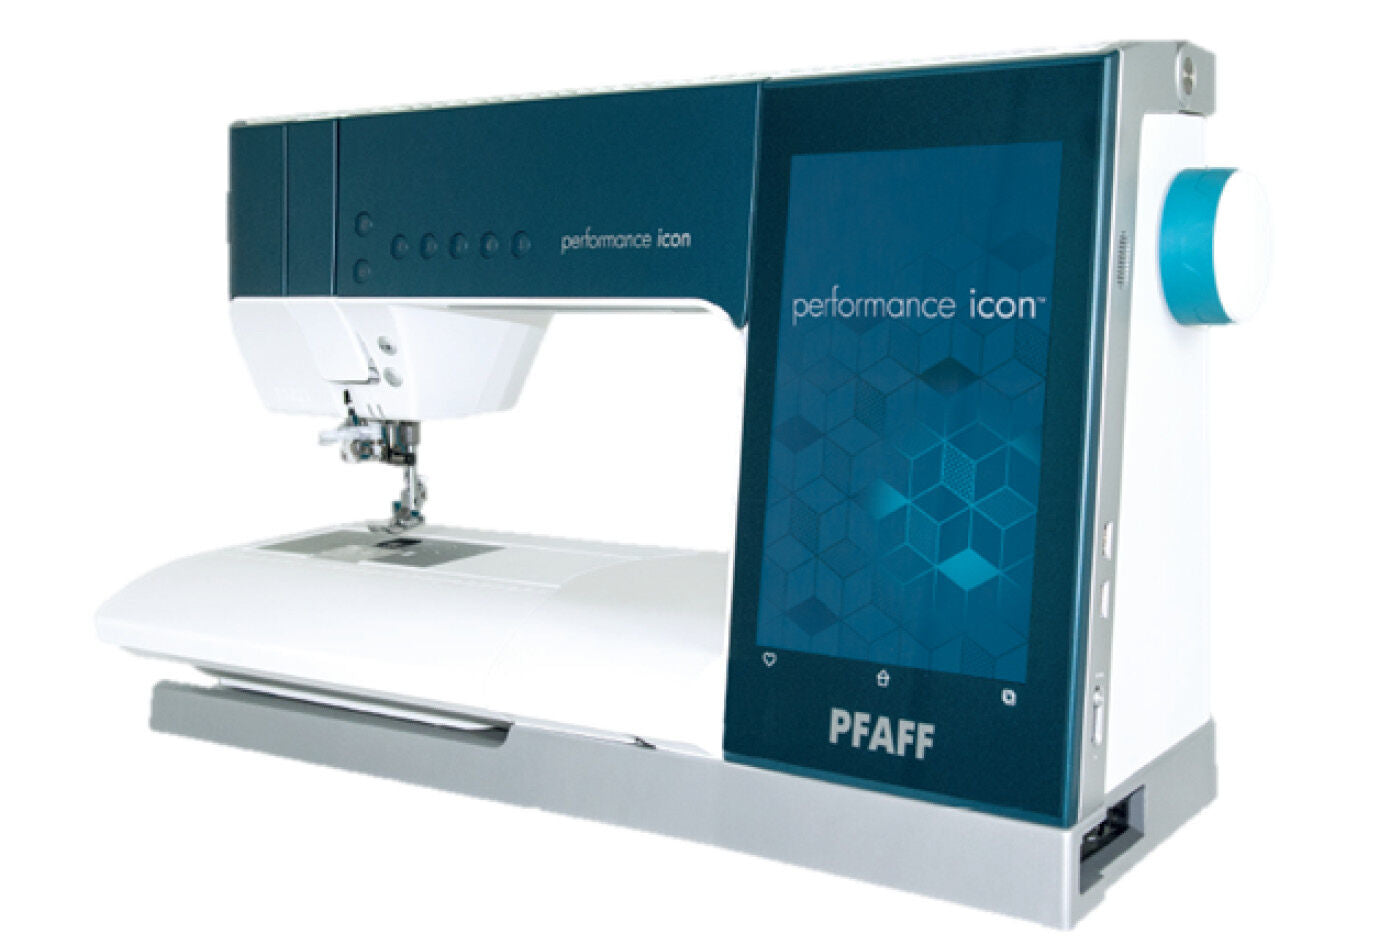 Pfaff model 30 sewing machine review 